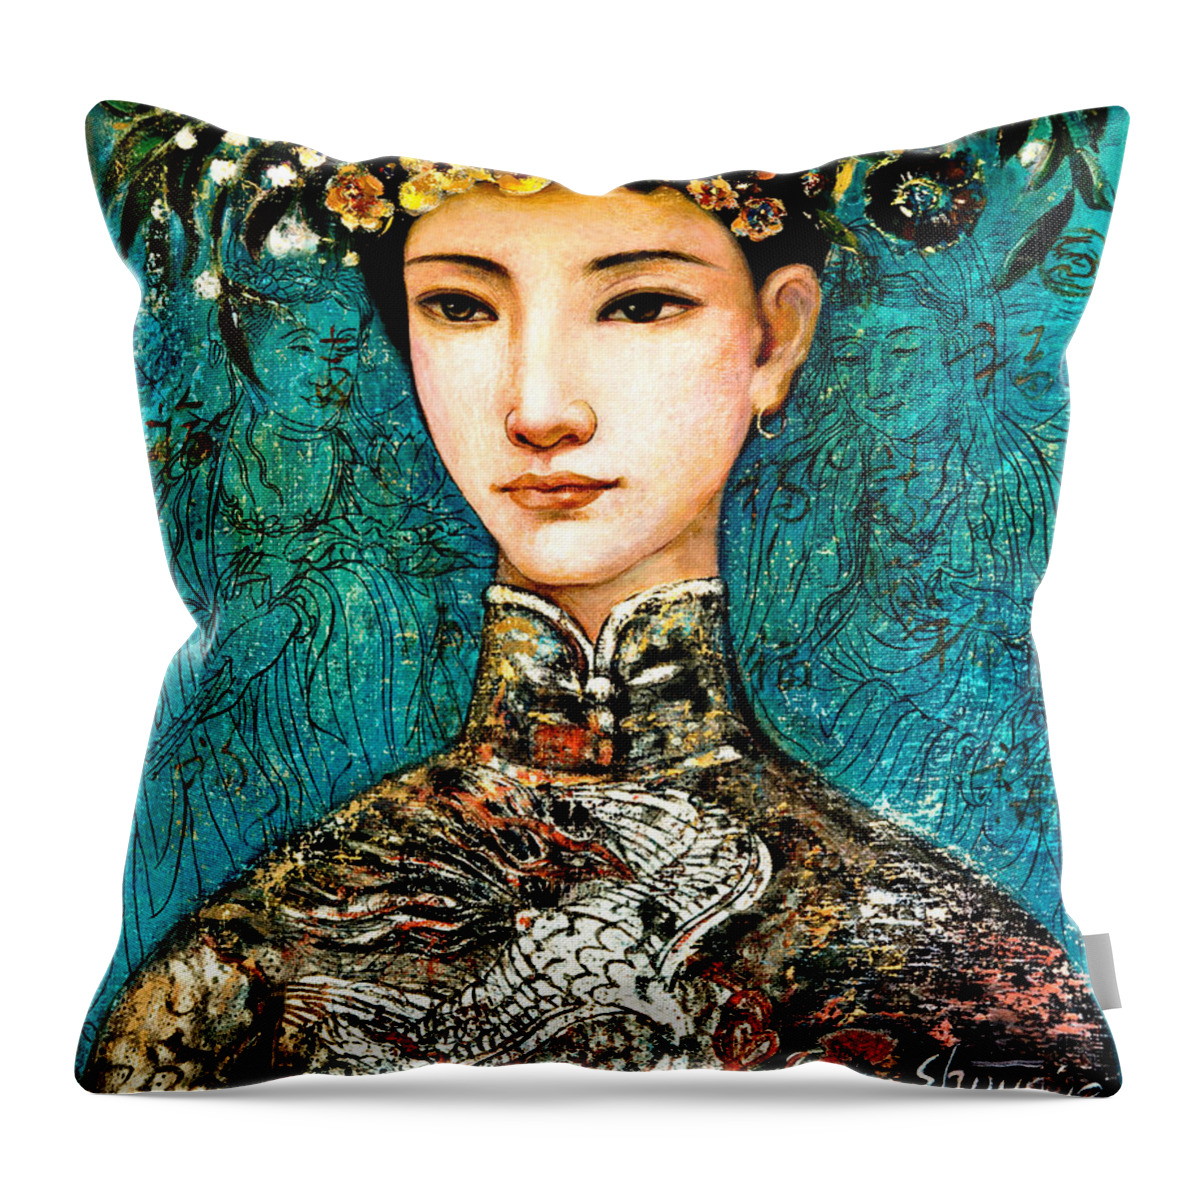 Shijun Throw Pillow featuring the painting Summer II by Shijun Munns